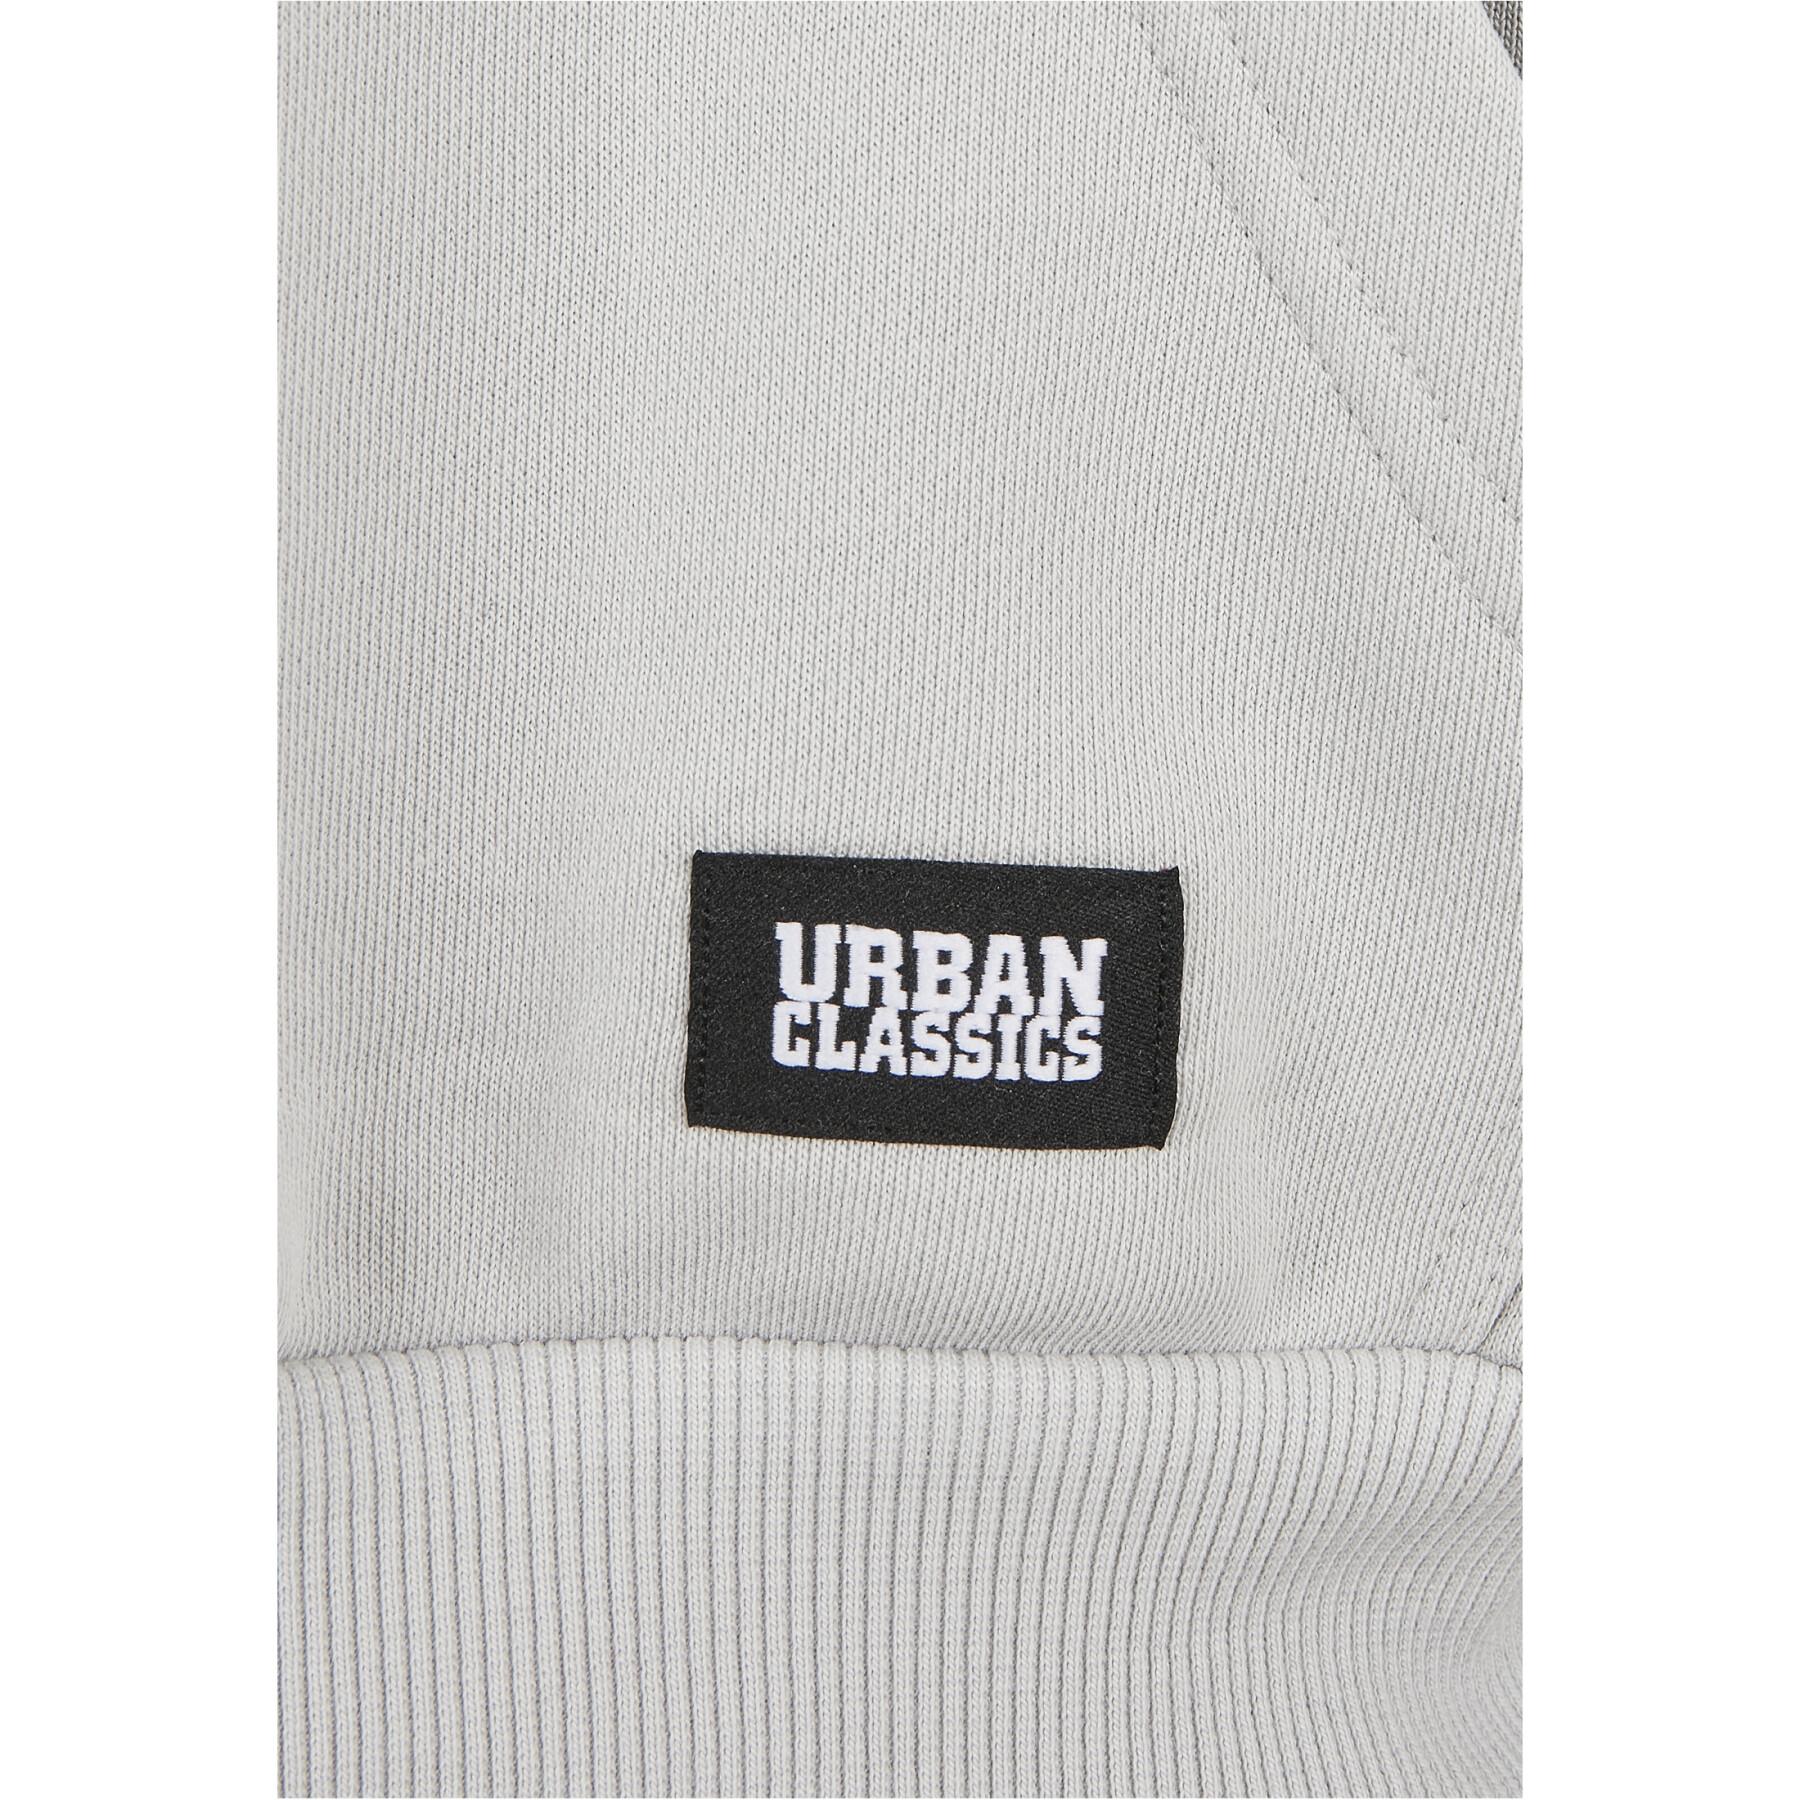 Hoodie Urban Classics upper block (large sizes)